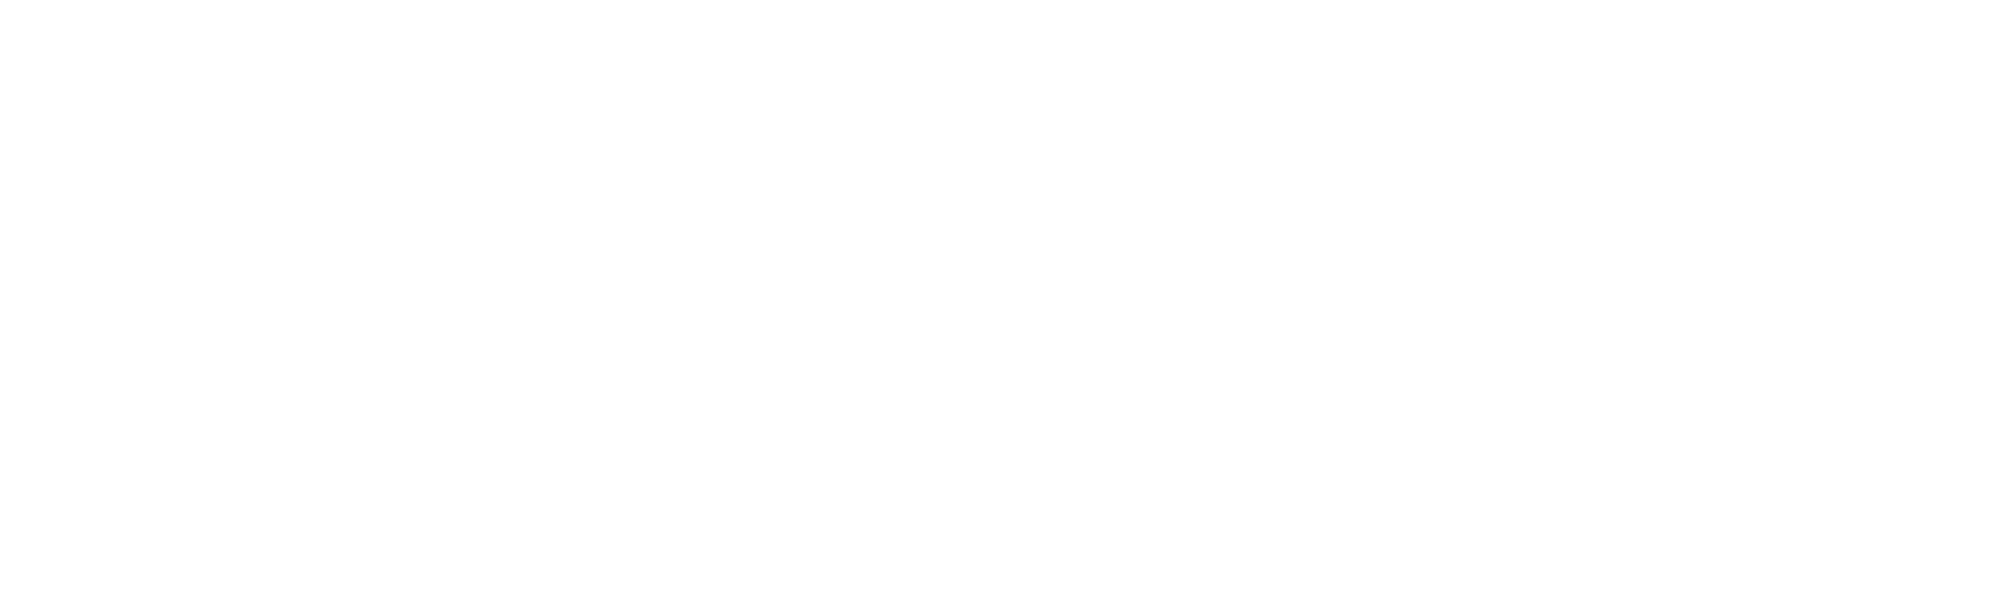 Robert Burns Birthday Celebration, January 28, 2023